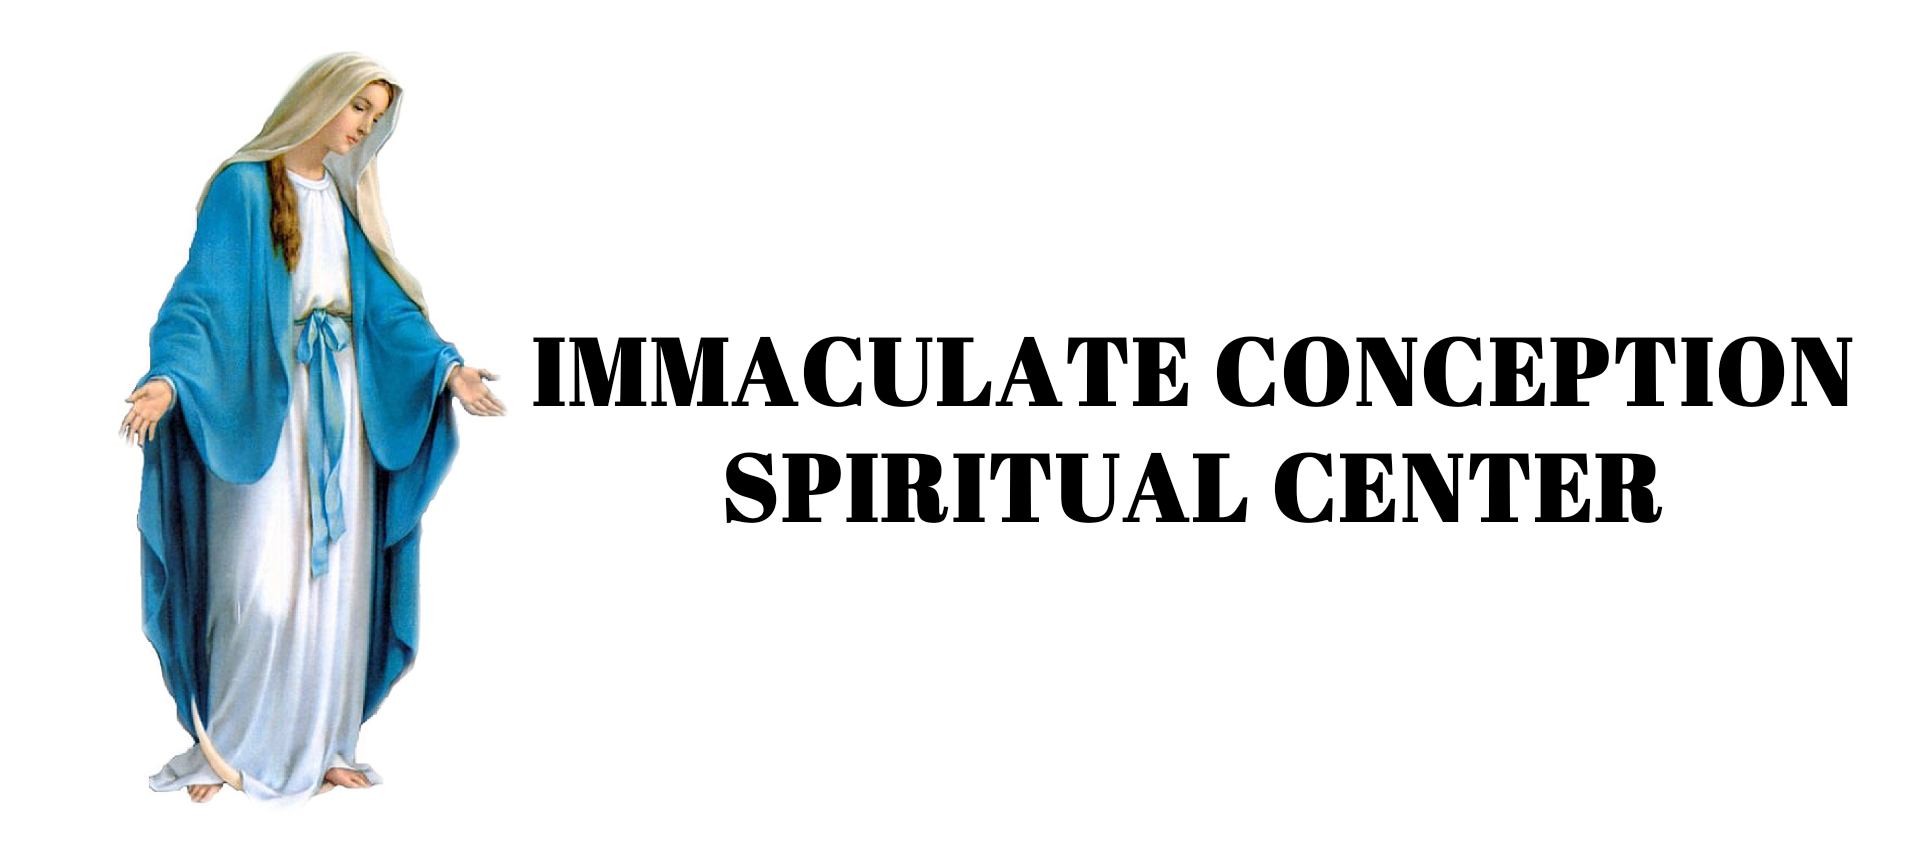 Immaculate Conception Spiritual Center